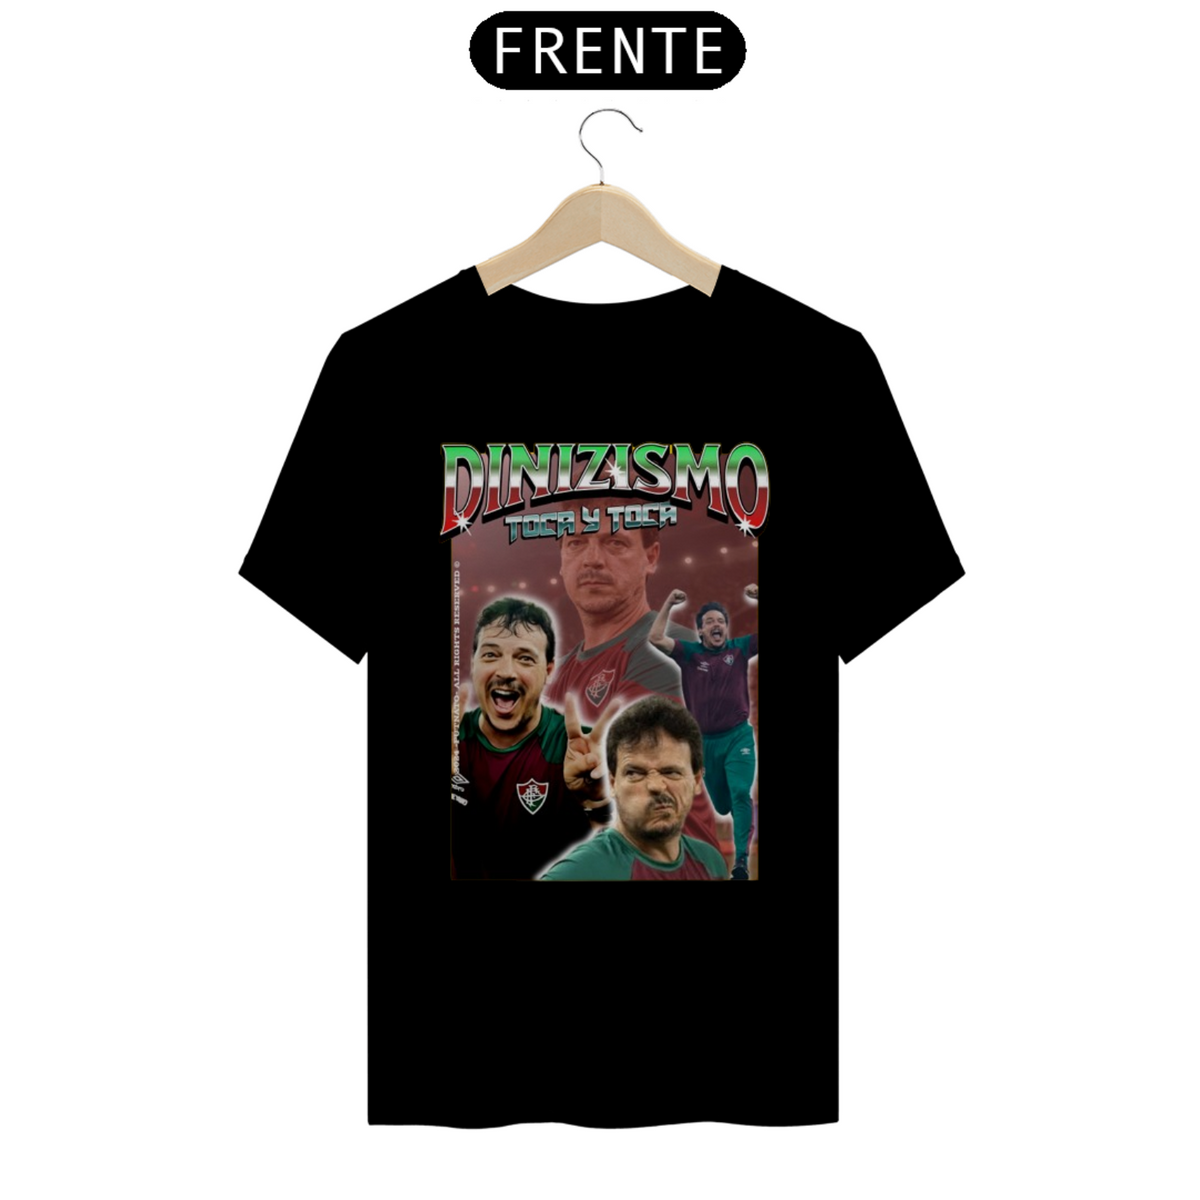 Nome do produto: Camisa Dinizismo - Fluminense